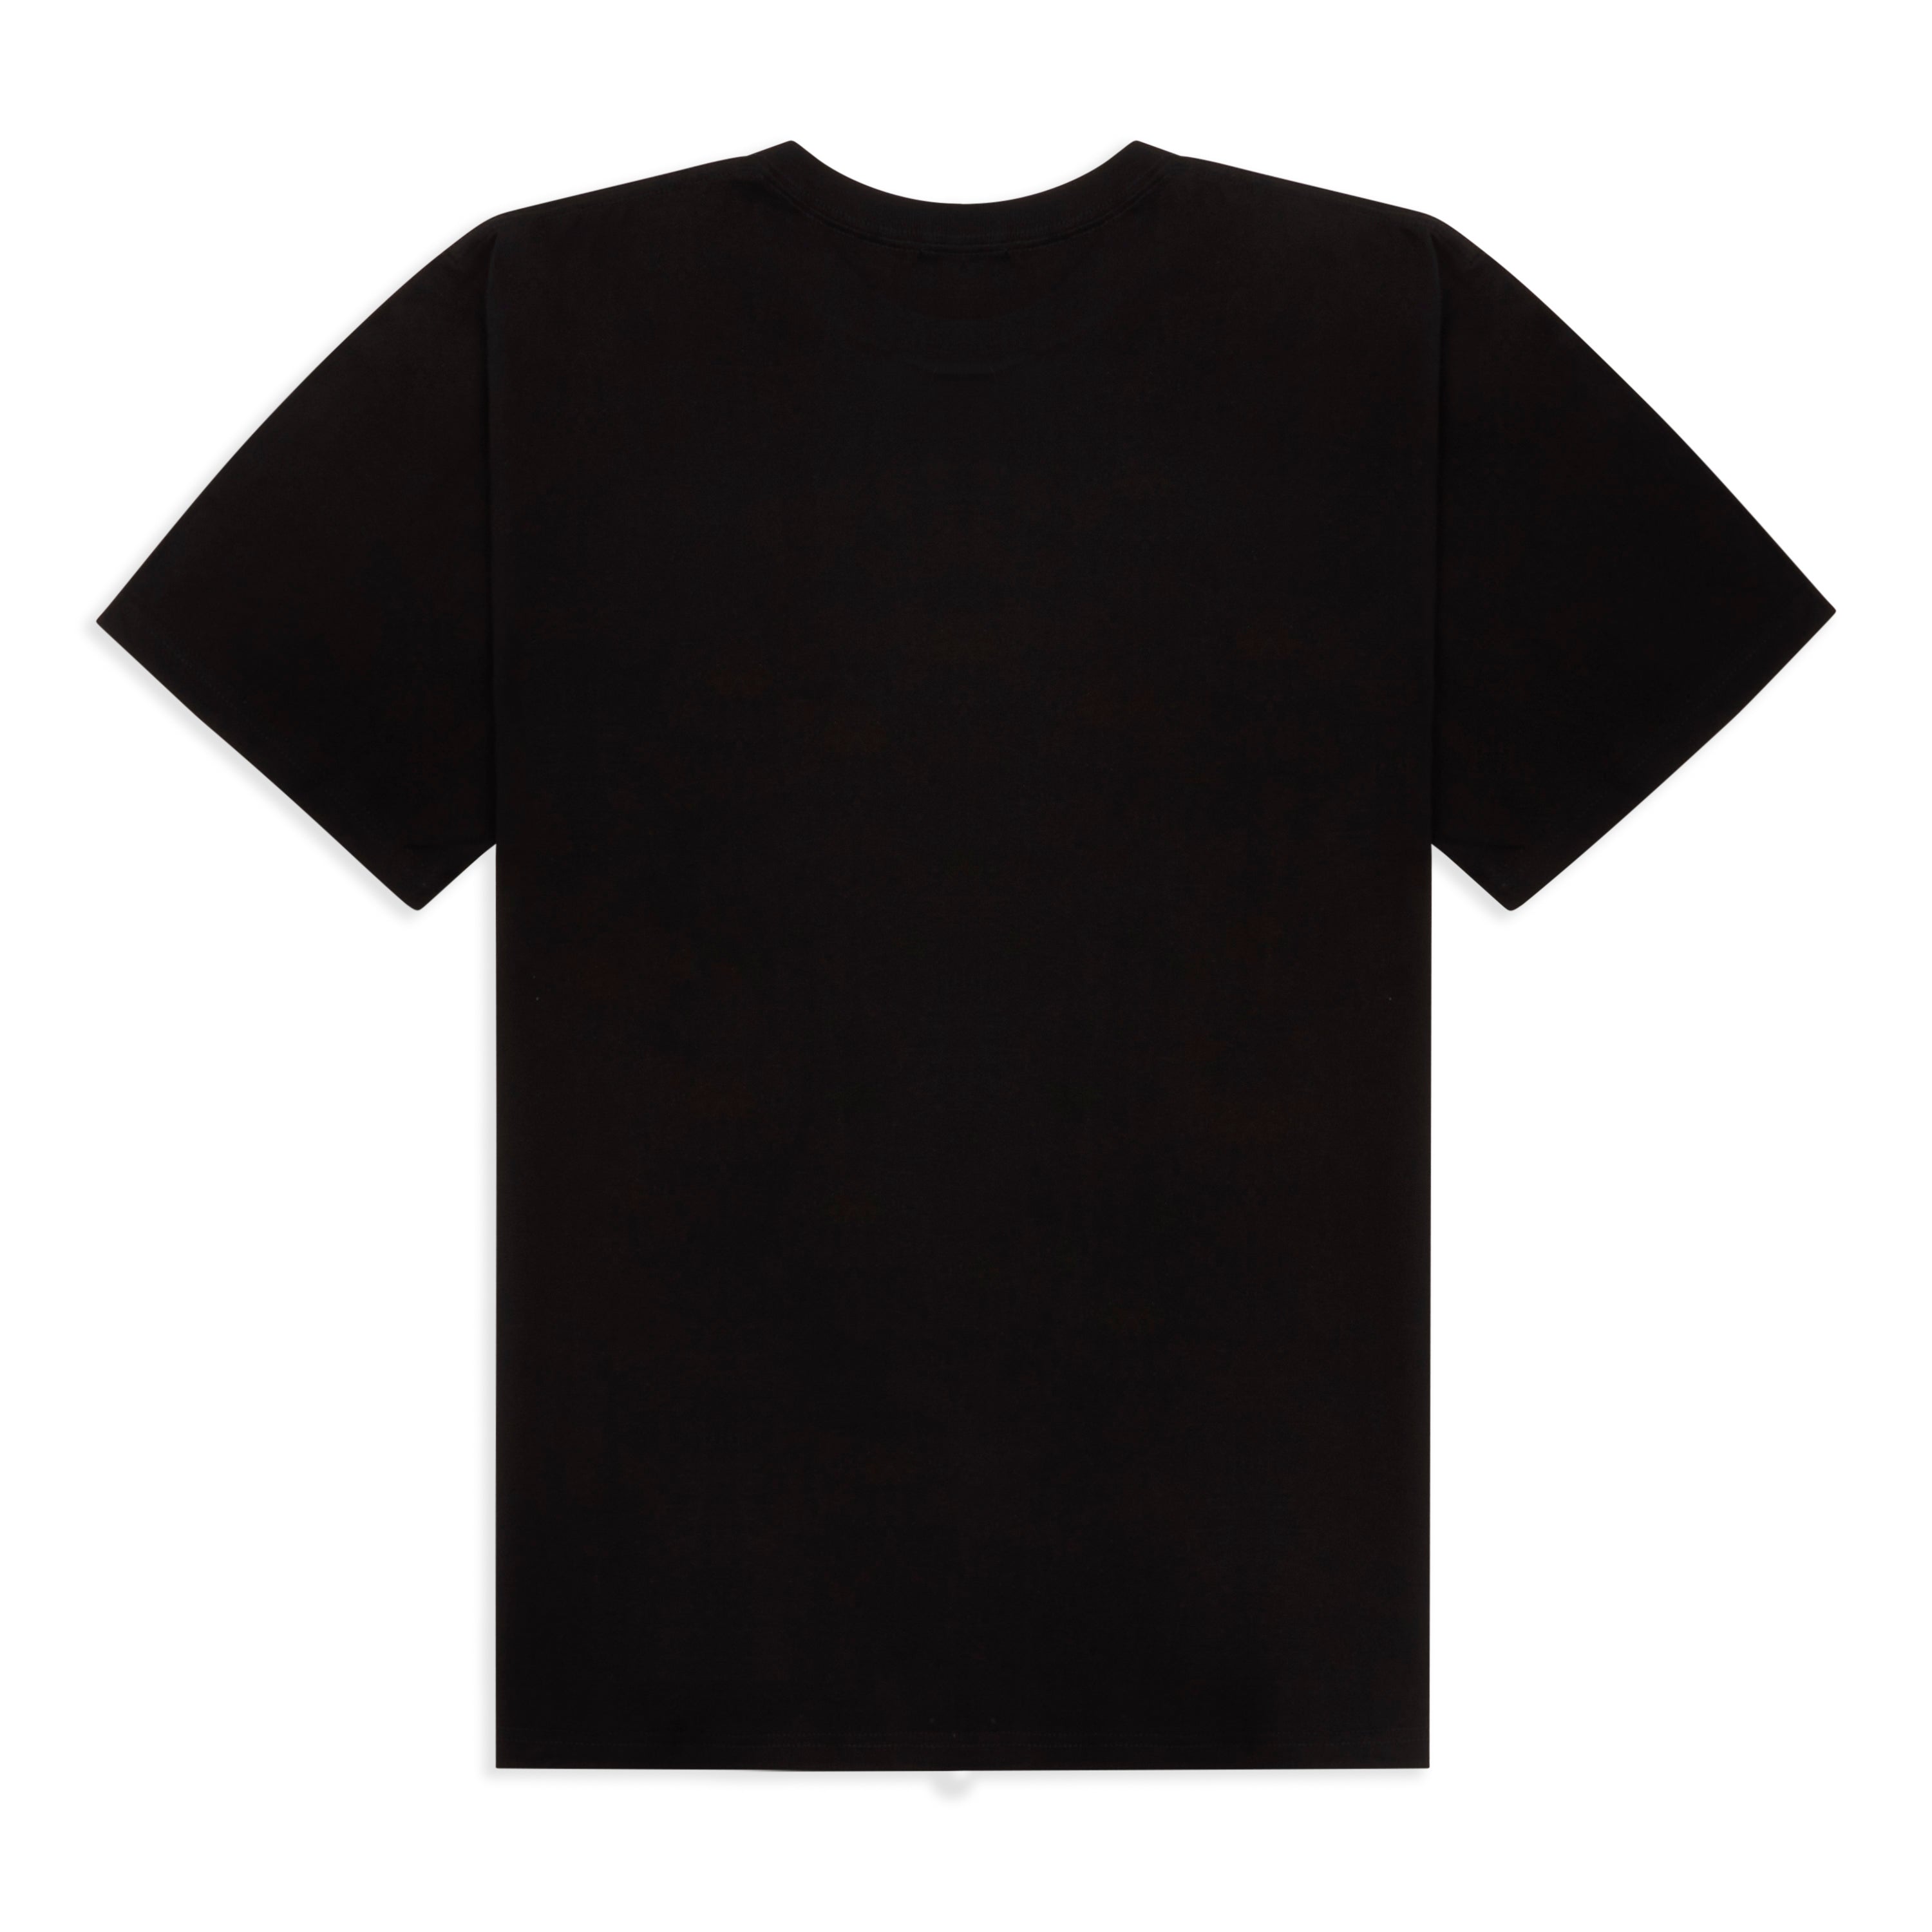 Youngfreshco Champions t-shirt black